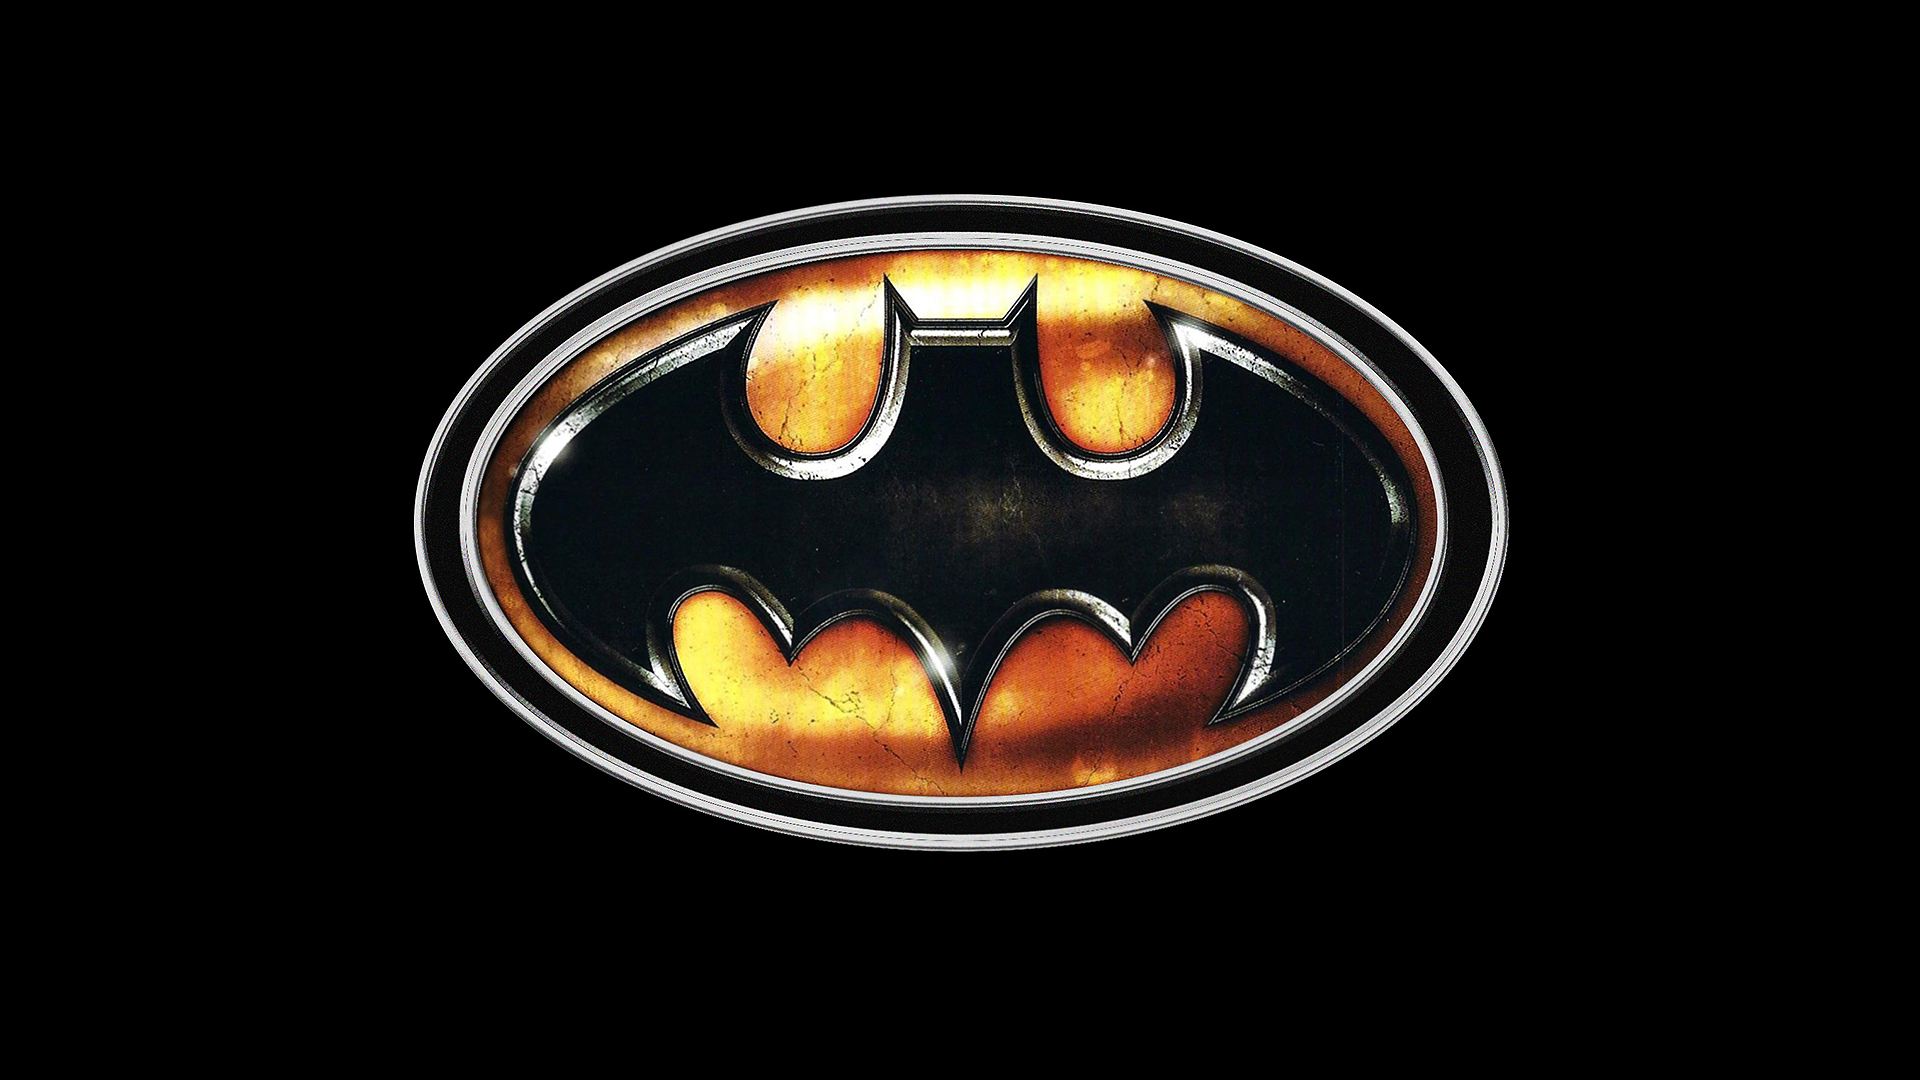 Скачать обои бесплатно Кино, Бэтмен, Логотип Бэтмена картинка на рабочий стол ПК